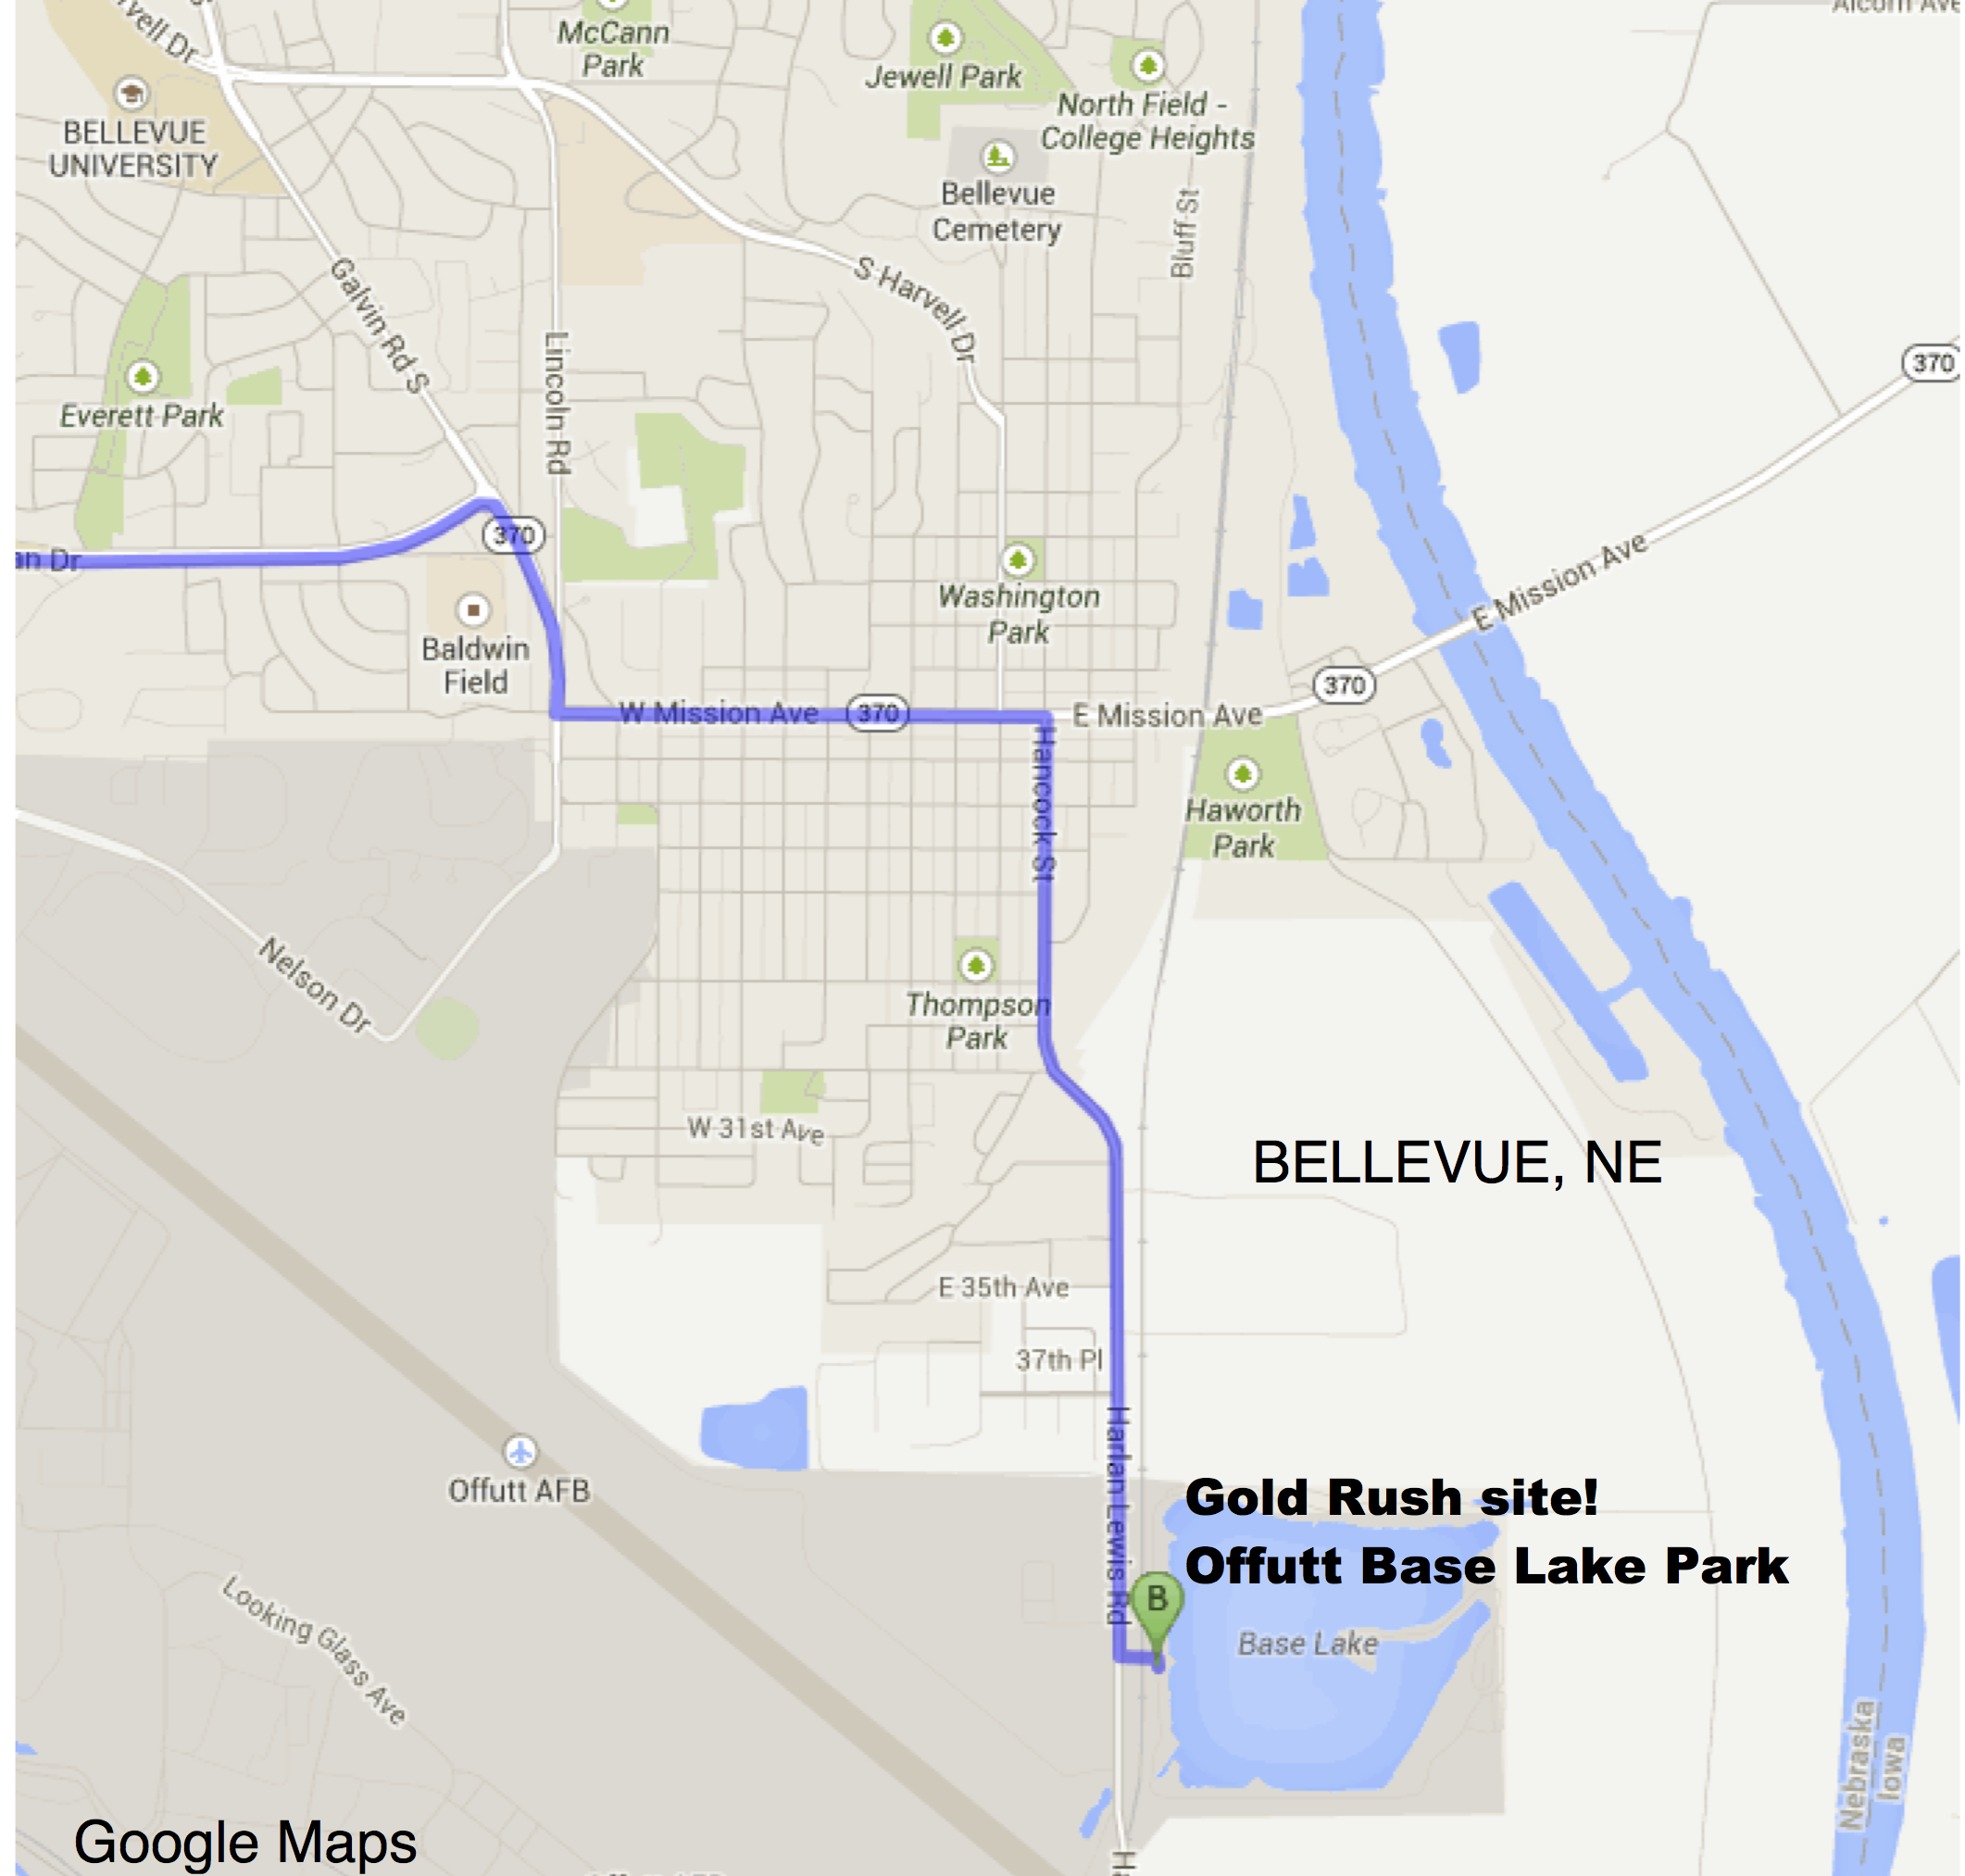 map to Base Lake - Google Maps 2